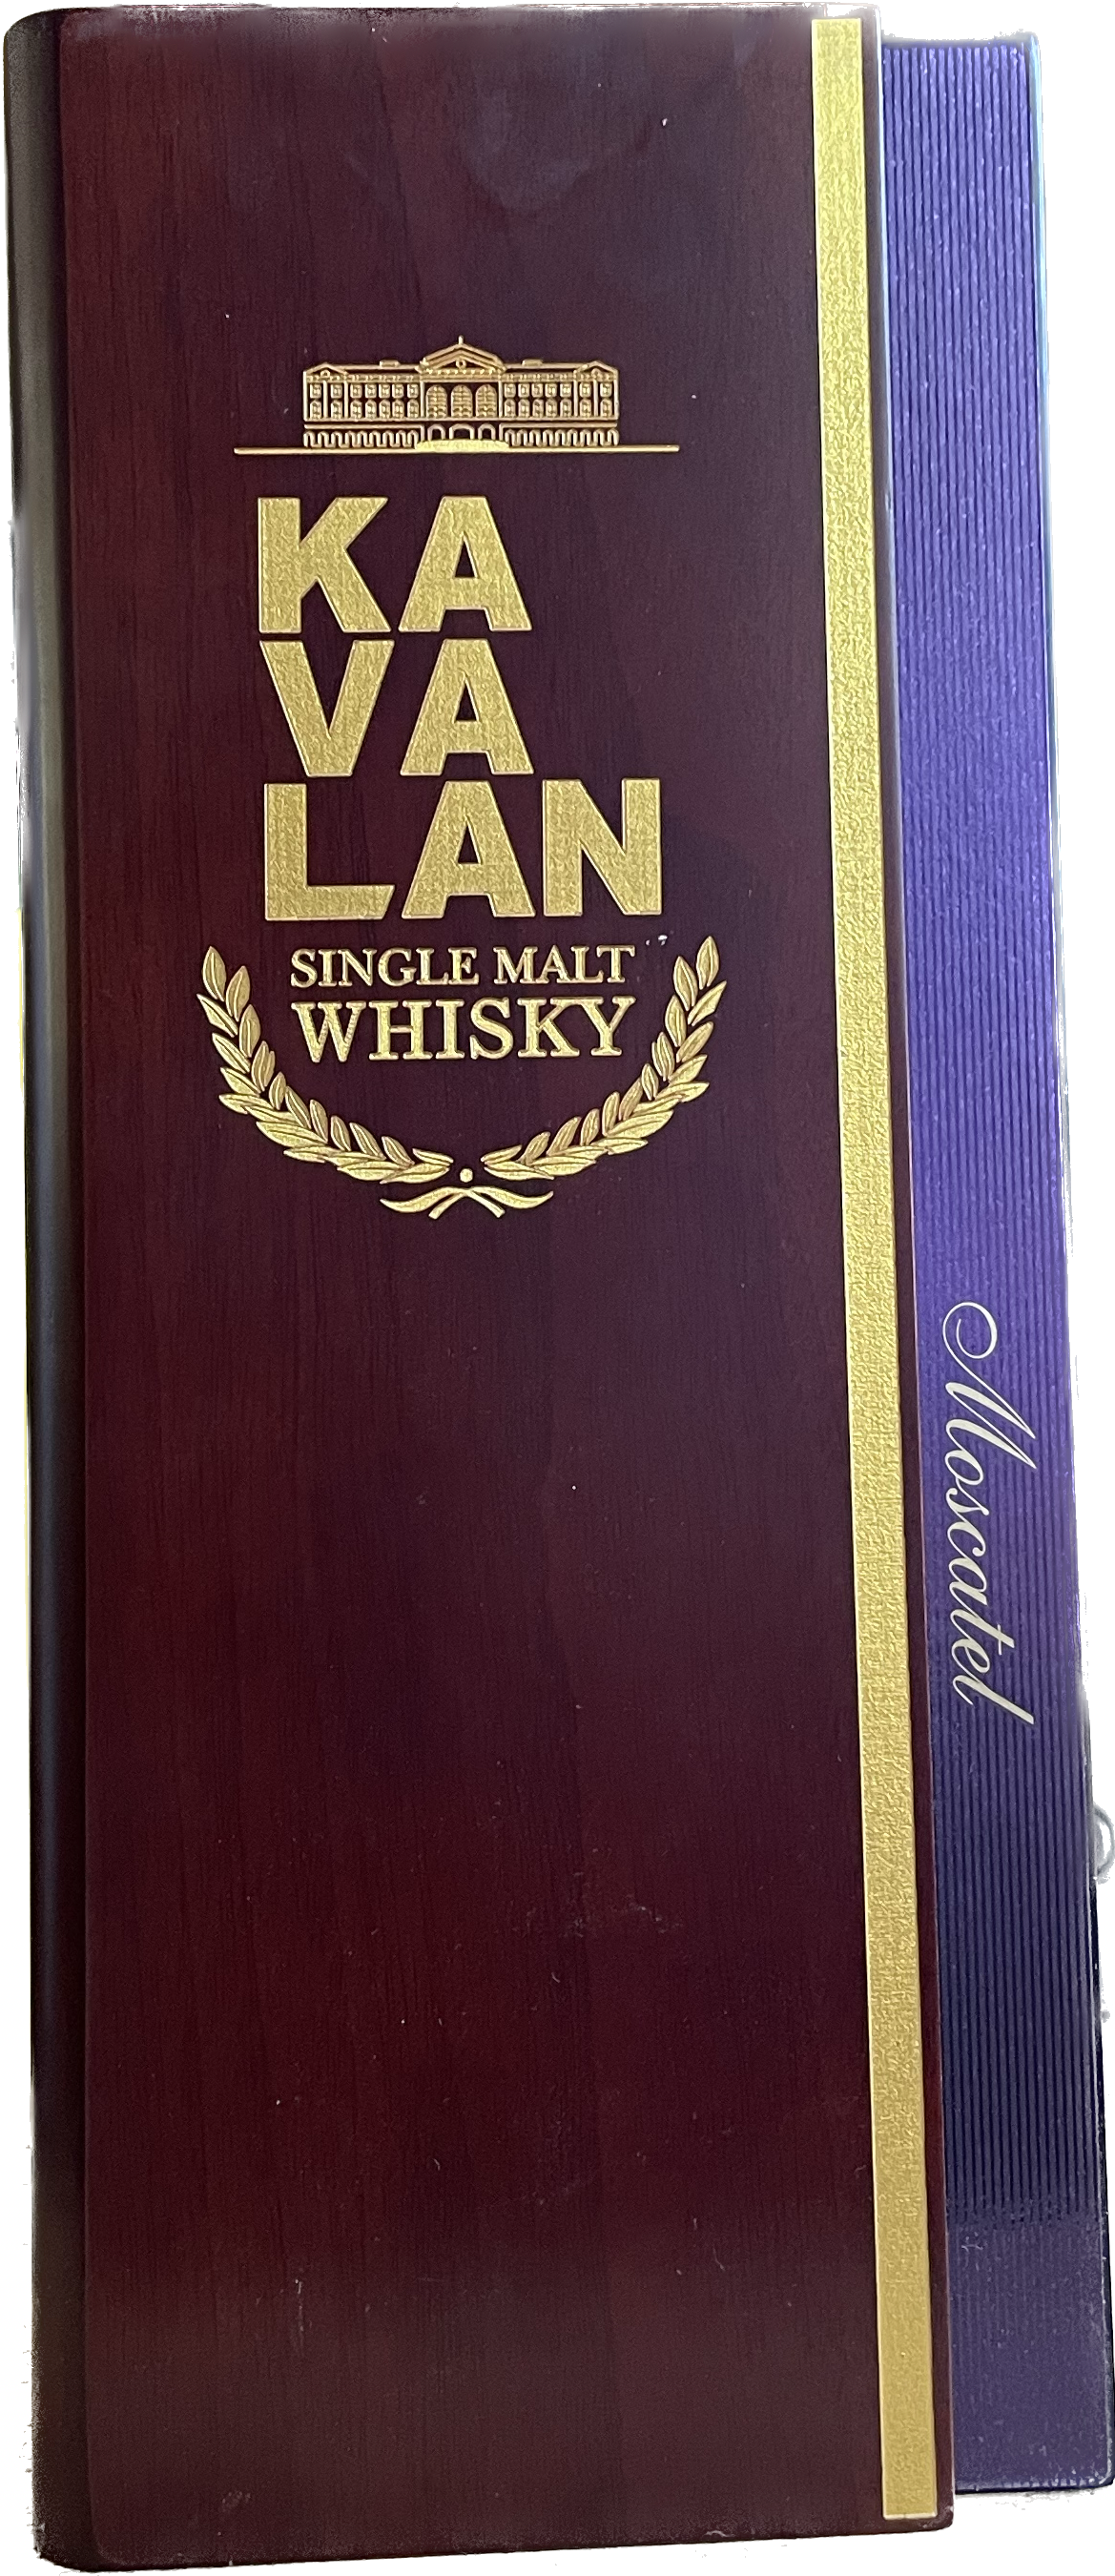 Kavalan Solist Moscatel Single Malt Whisky